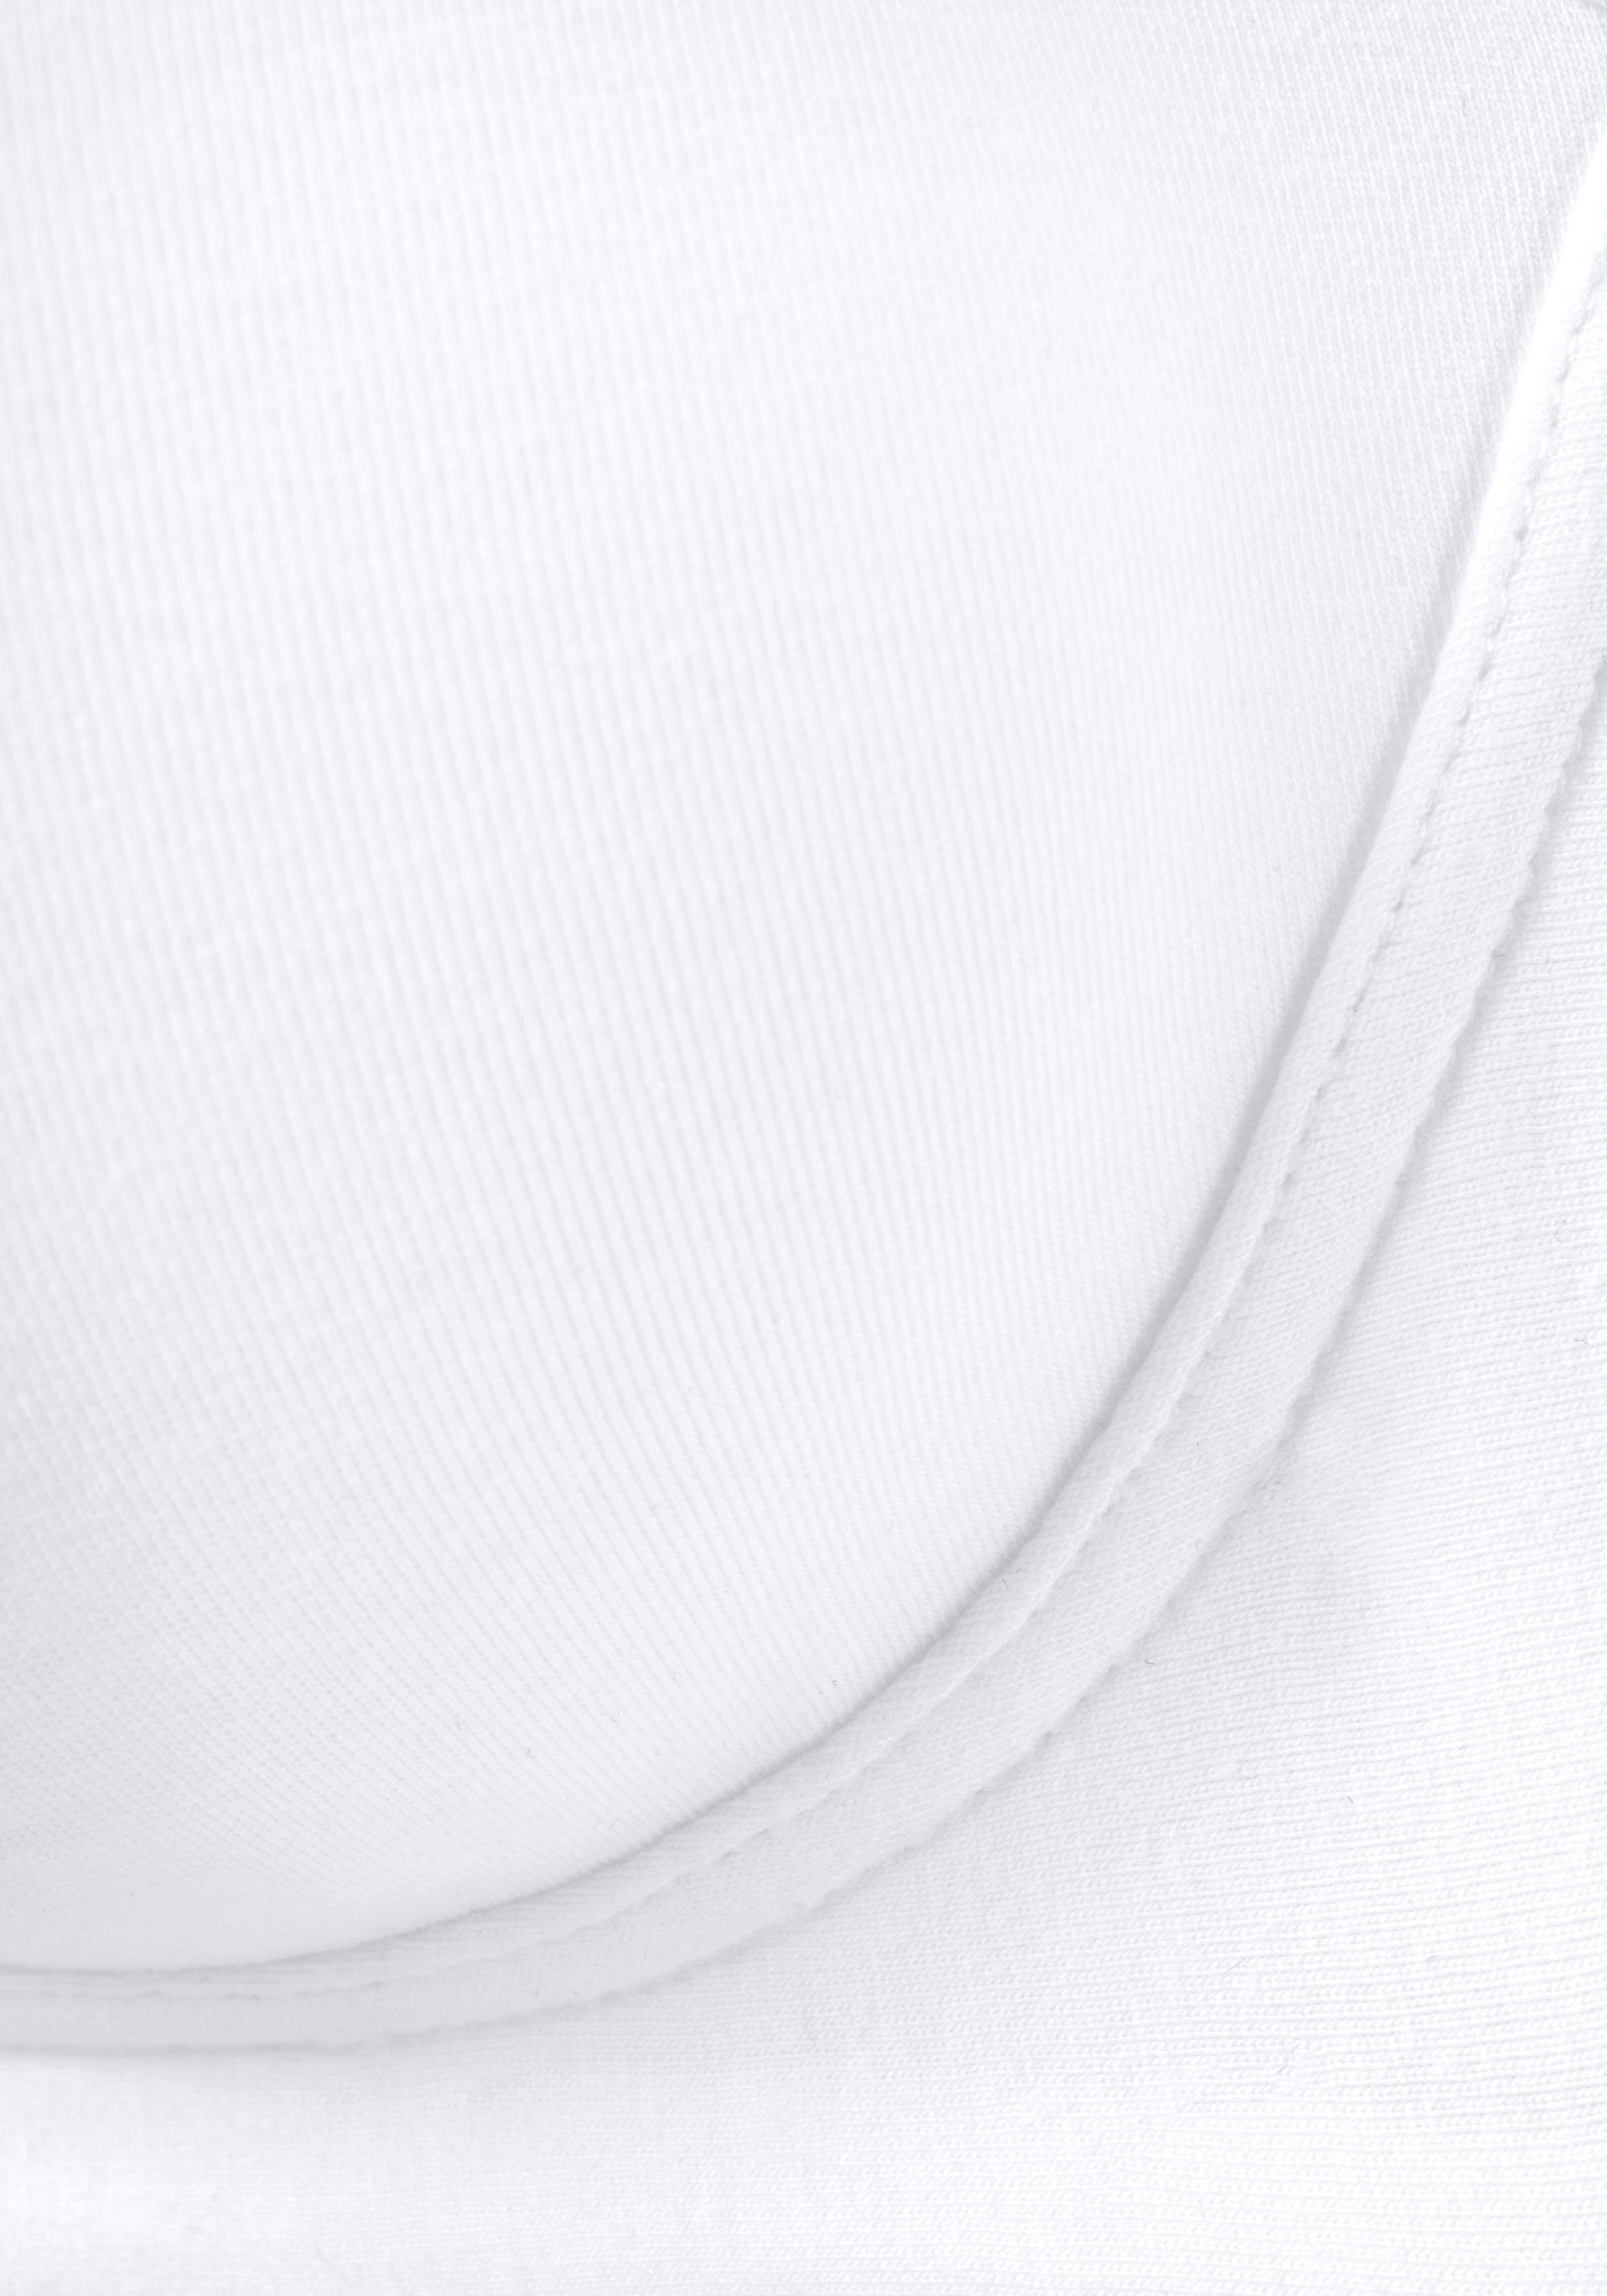 petite fleur ohne Stück) mint+weiß Baumwolle, Dessous Bügel Basic (Packung, T-Shirt-BH 2 aus